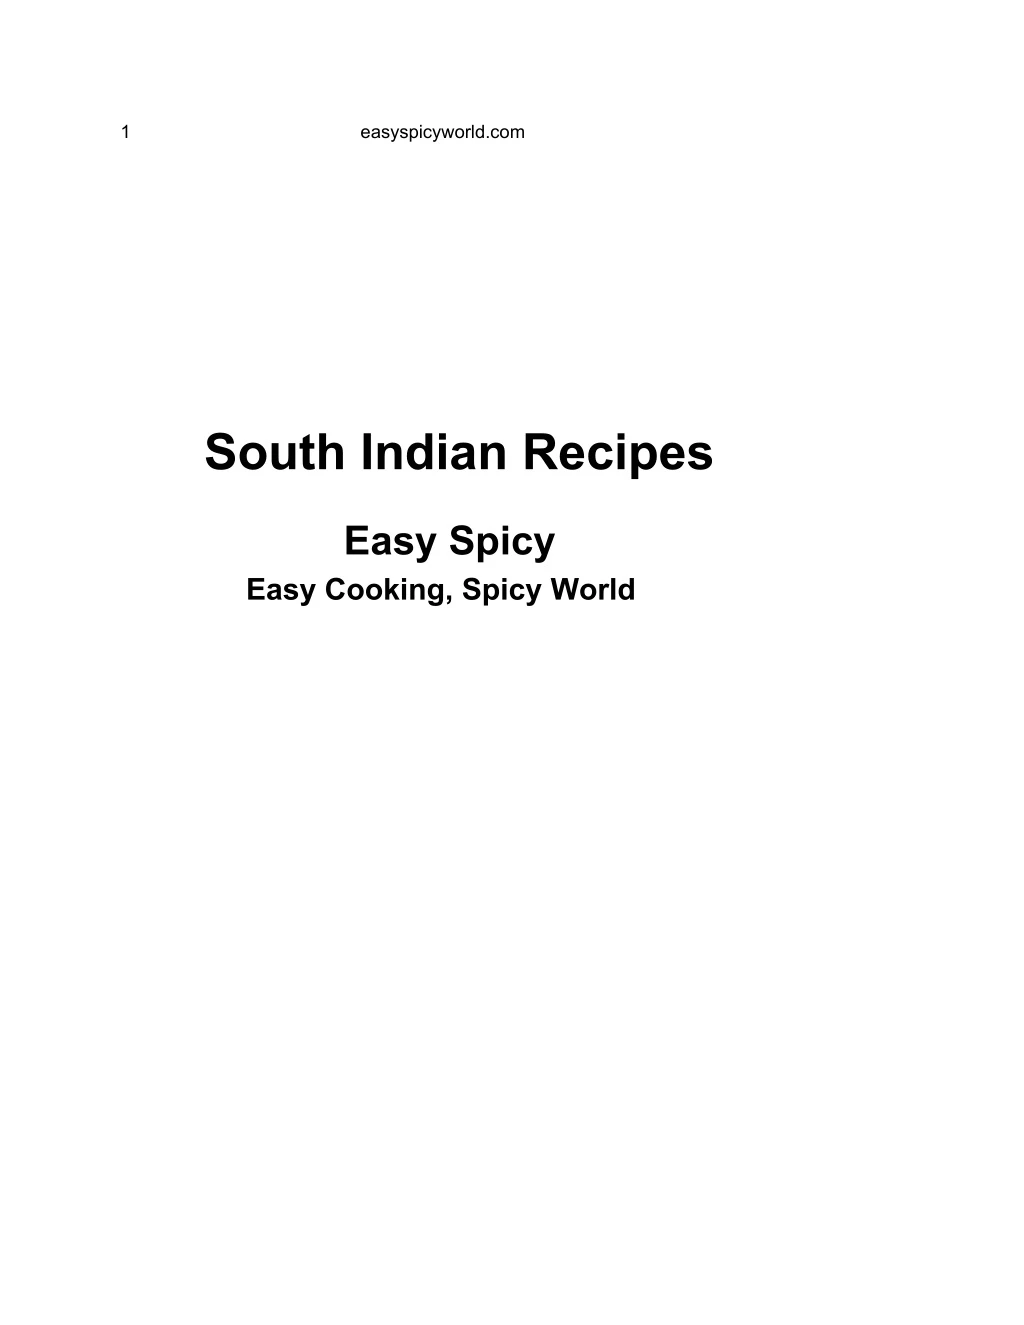 1 easyspicyworld com south indian recipes